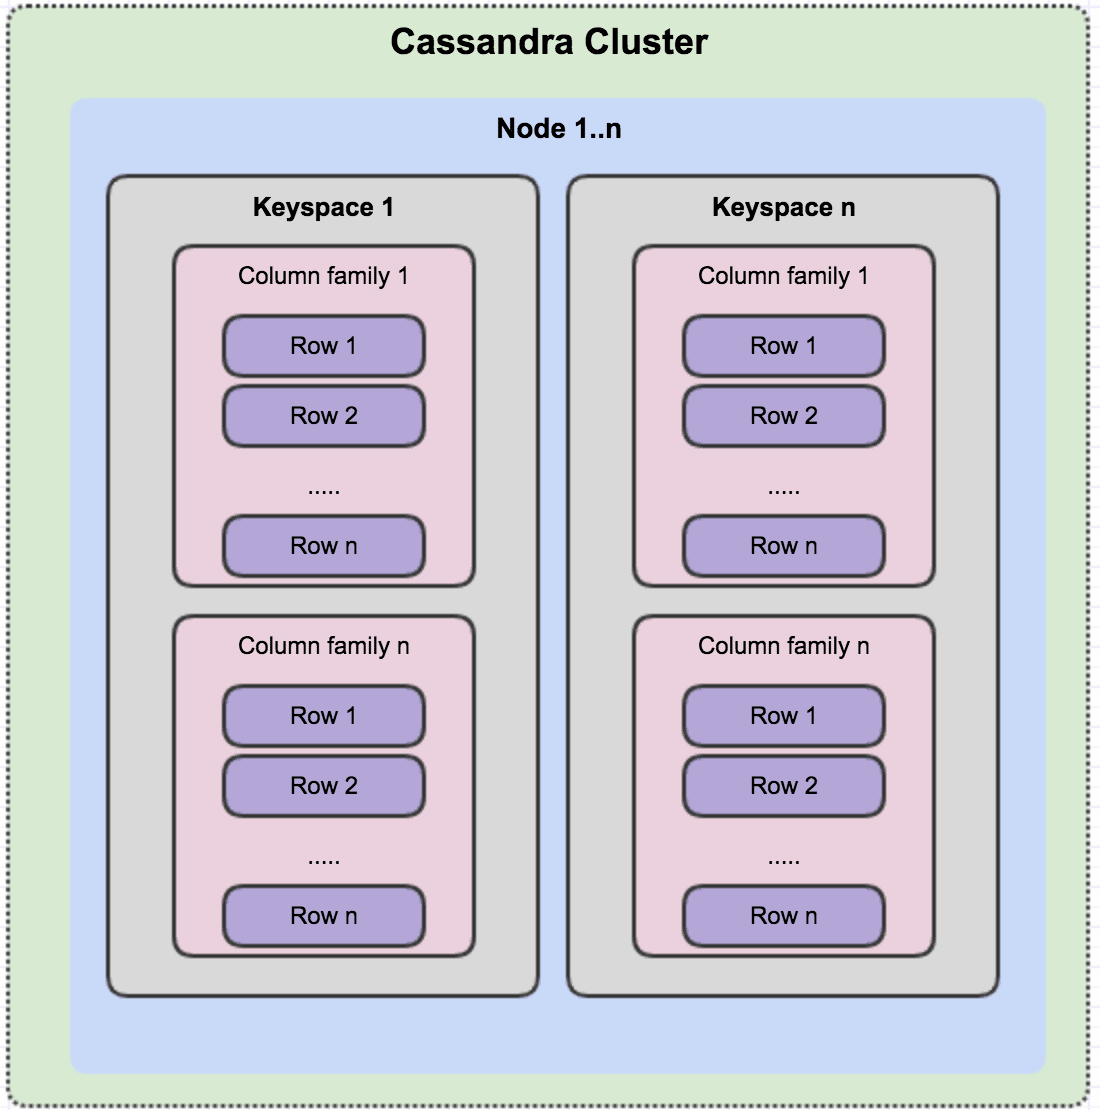 Cassandra Cluster Node l..n Keyspace 1 Column family 1 Row 1 Row 2 Row n Column family n Row 1 Row 2 Row n Keyspace n Column family 1 Row 1 Row 2 Row n Column family n Row 1 Row 2 Row n 